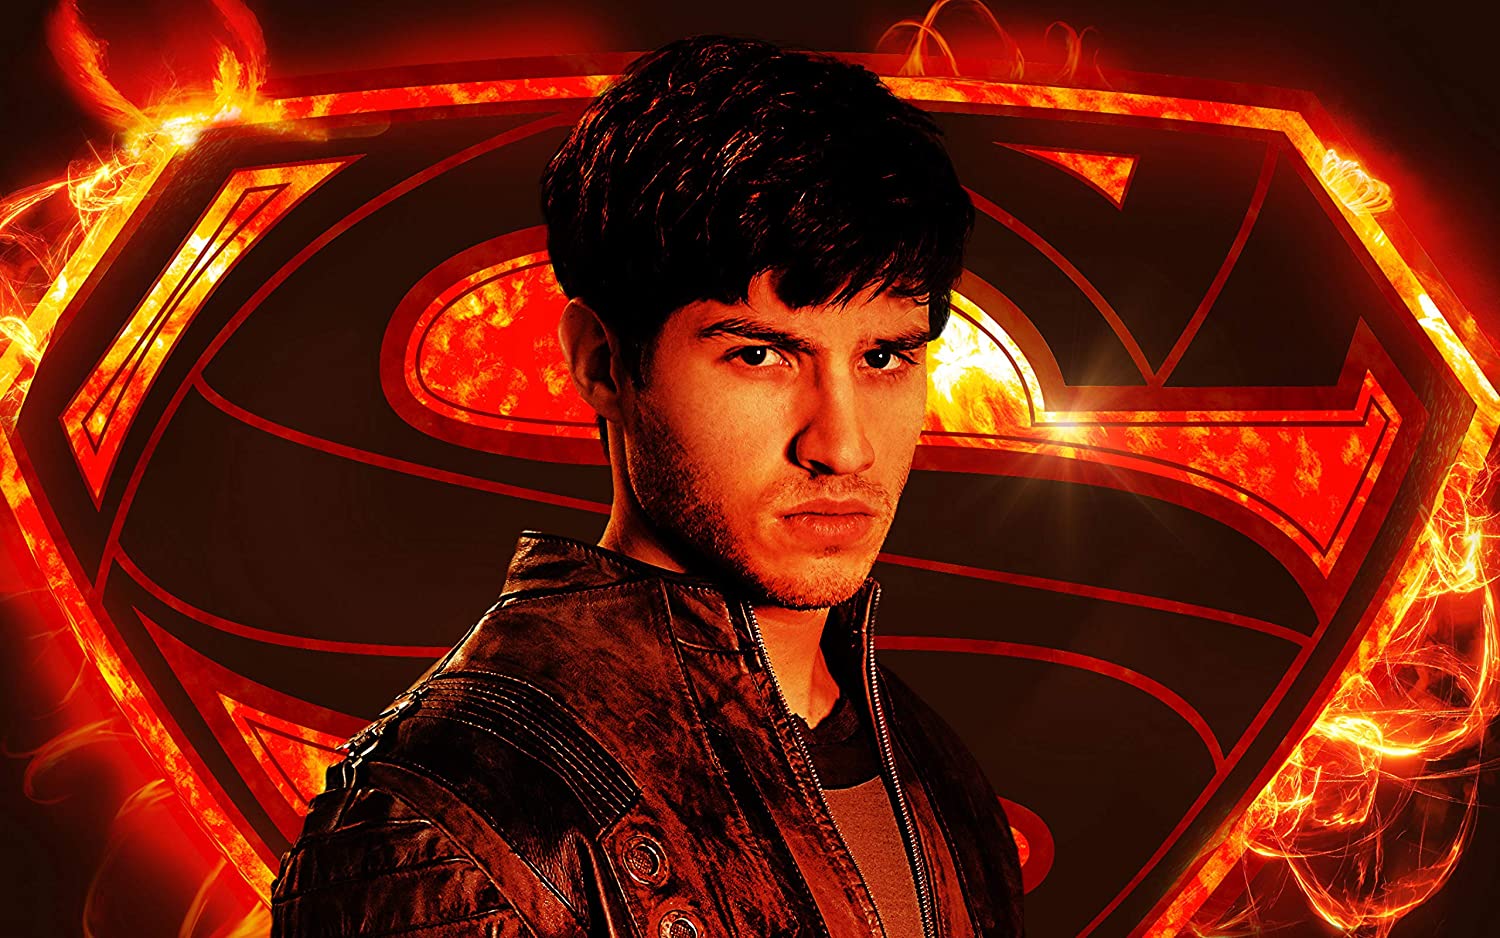 Cameron Cuffe in Krypton